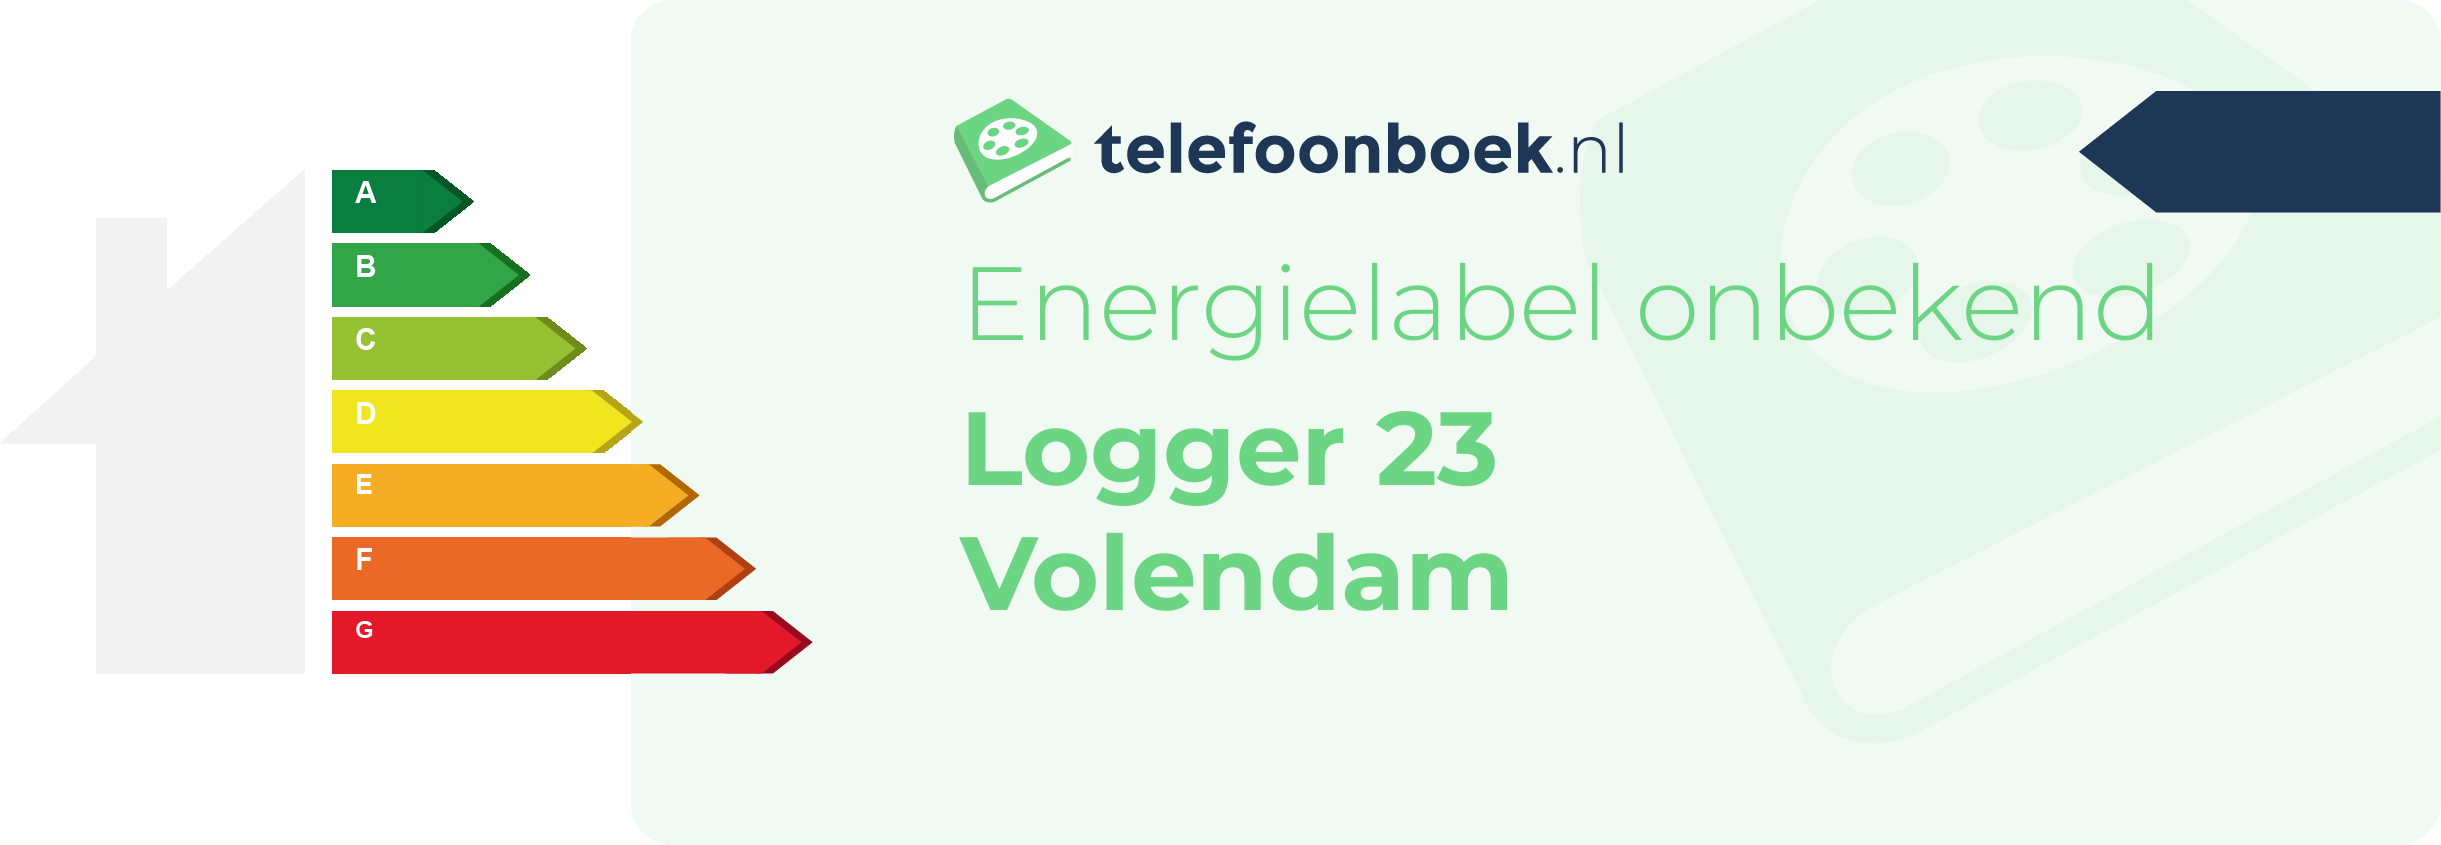 Energielabel Logger 23 Volendam